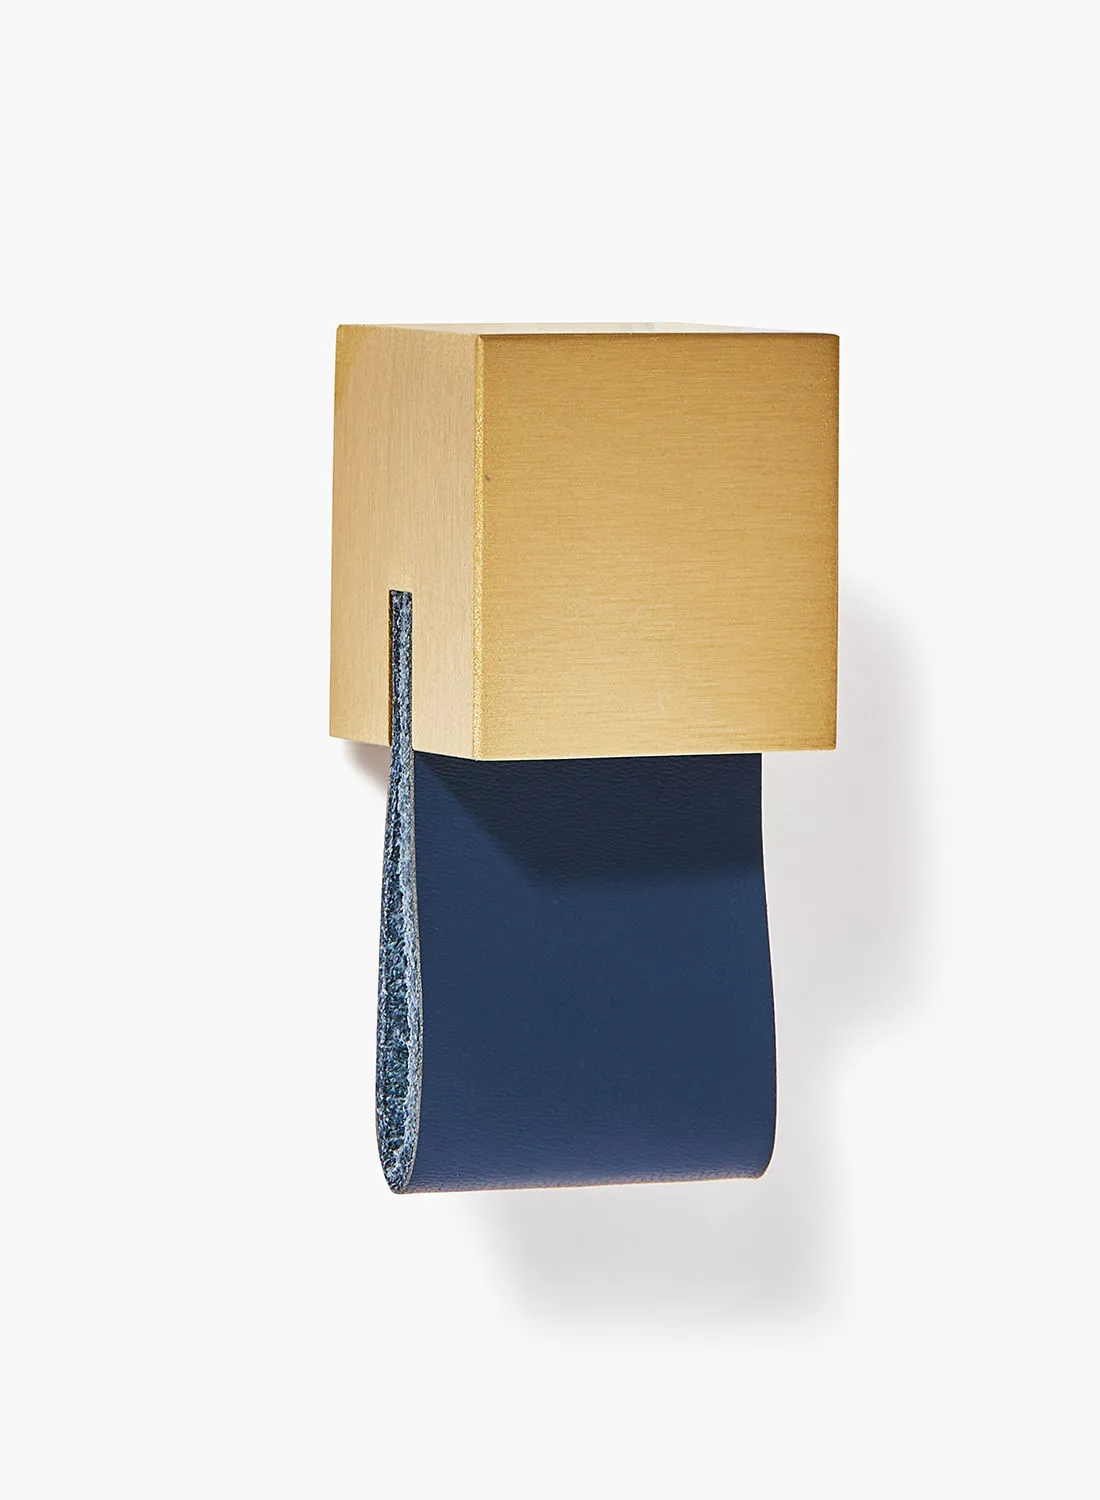 Amal Colourful Brass Leather Square Drawer Knob Dark Blue/Brass 26 x 53 x 20millimeter